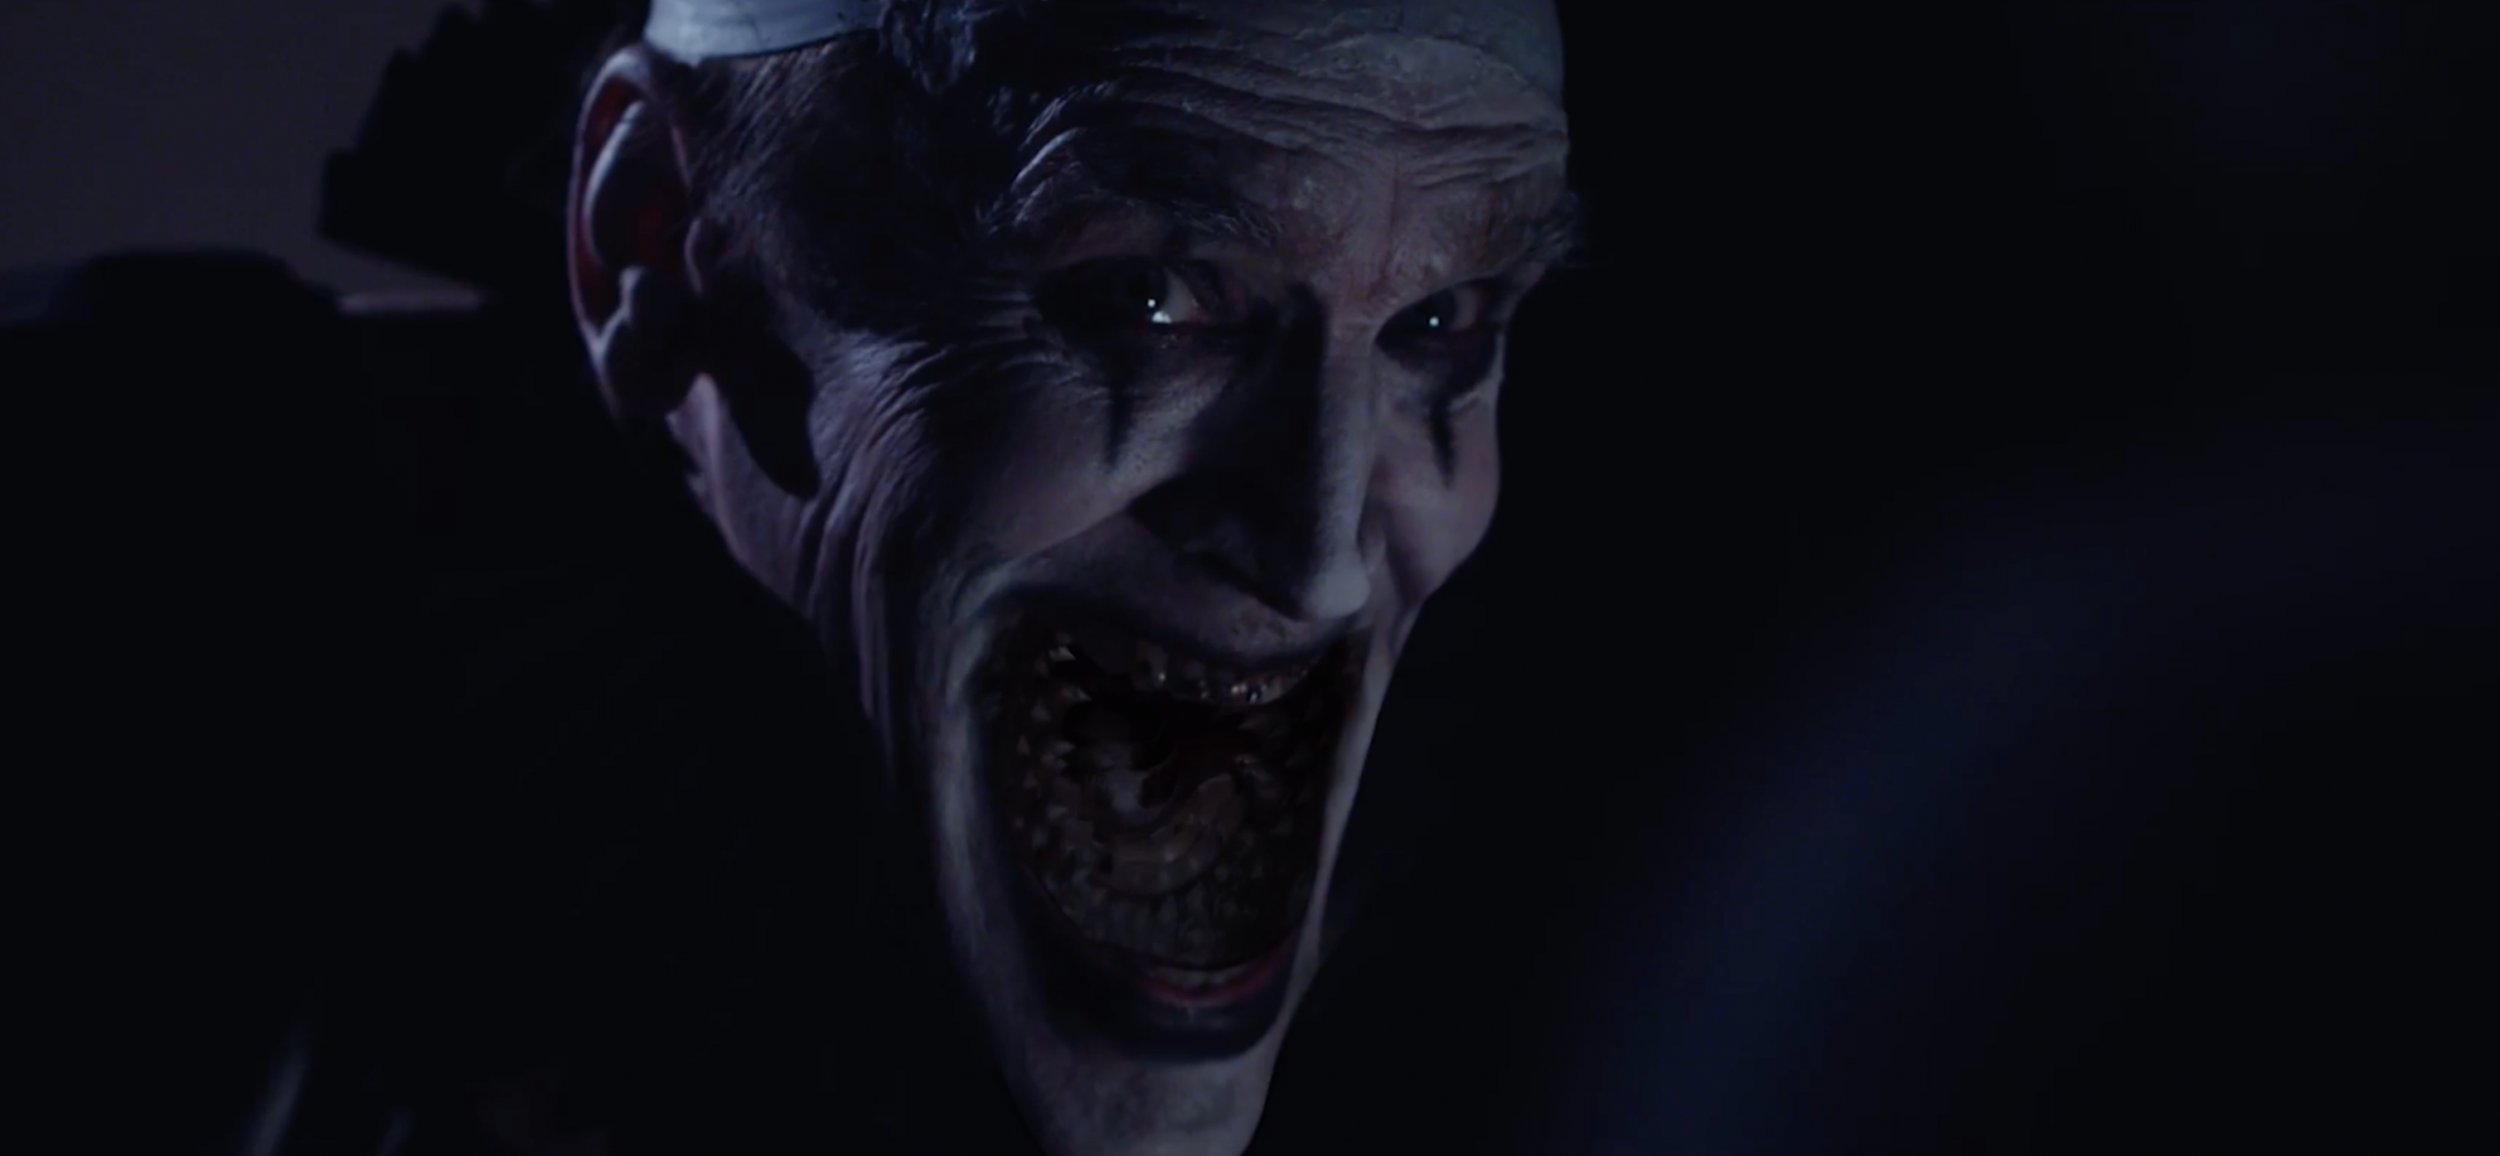 Killer Clown Horror is Back in 'Crepitus'